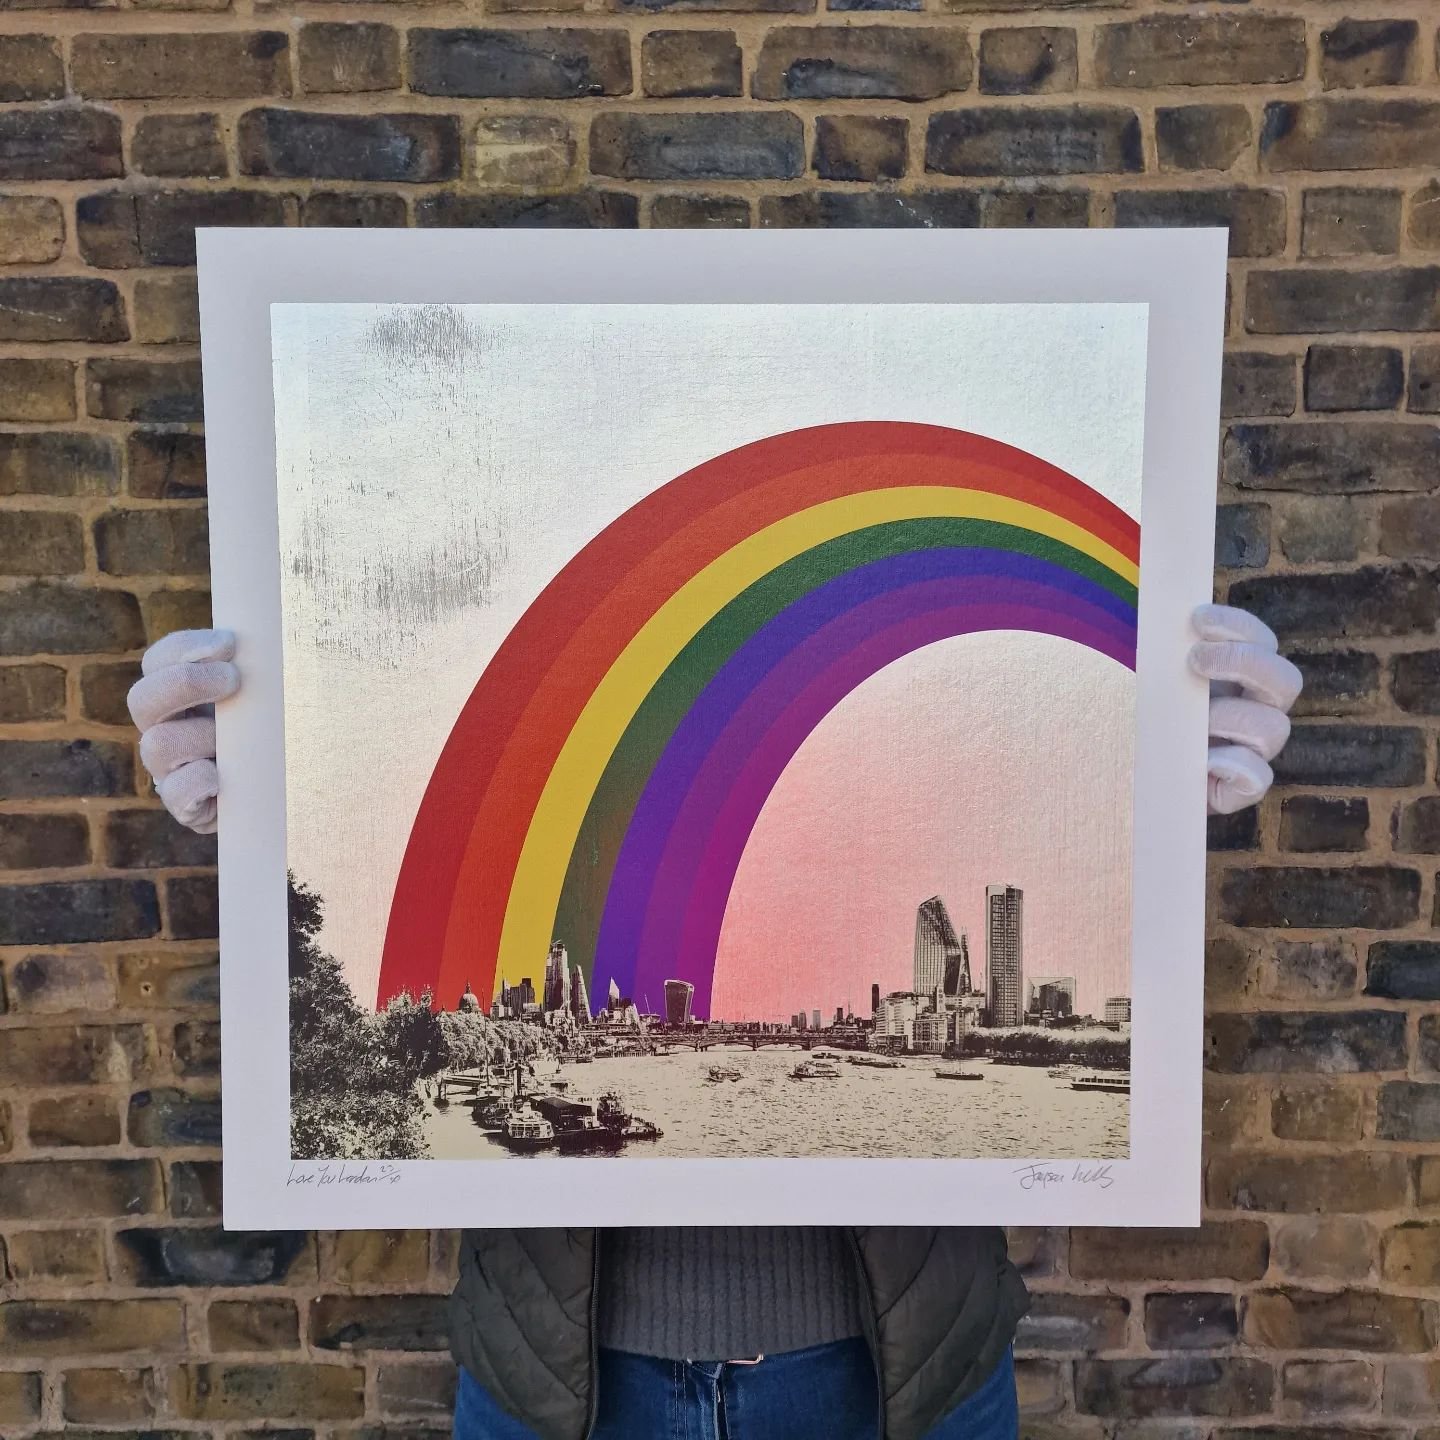 @xennial_gallery 

&quot;Love you, London. &quot;

Edition number 23/50, by artist @jaysonlilley 

#xennialgallery #bexleyvillage #londongallery #artcollection #limitededitionprints #artcollector #artoninstagram #art #framedart #artprint #picturefram